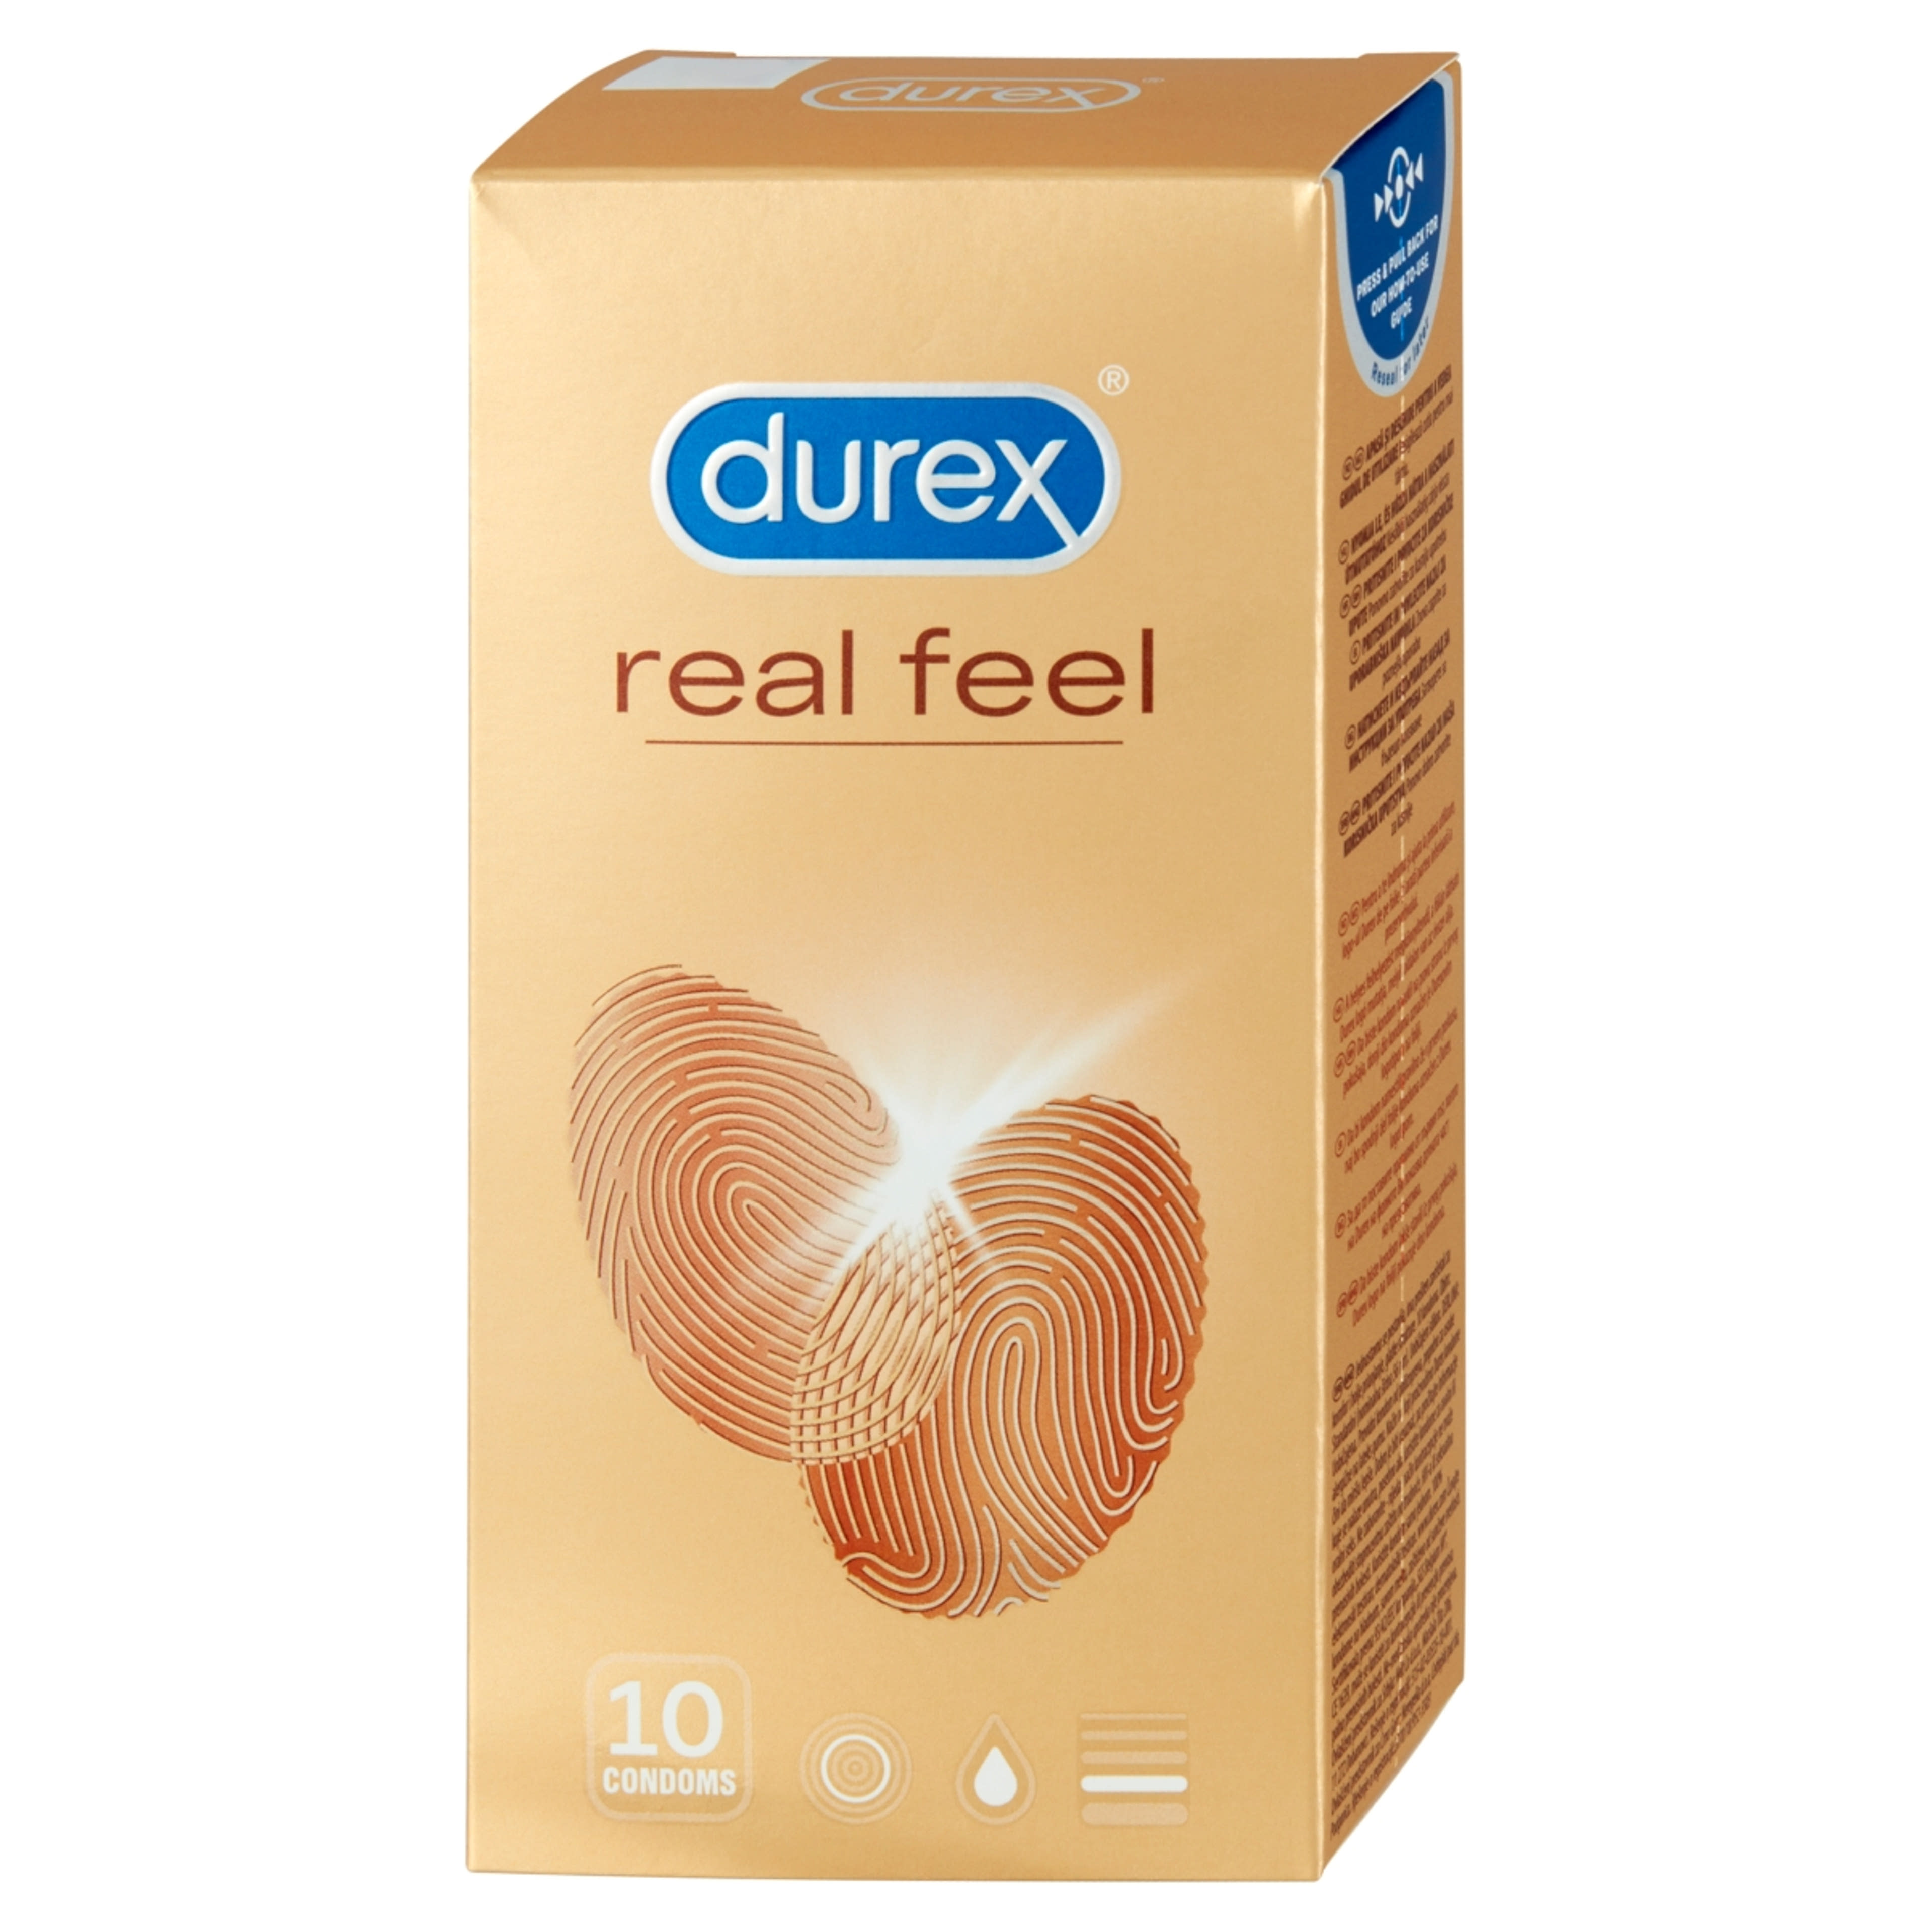 Durex Real feel óvszer - 10 db-5